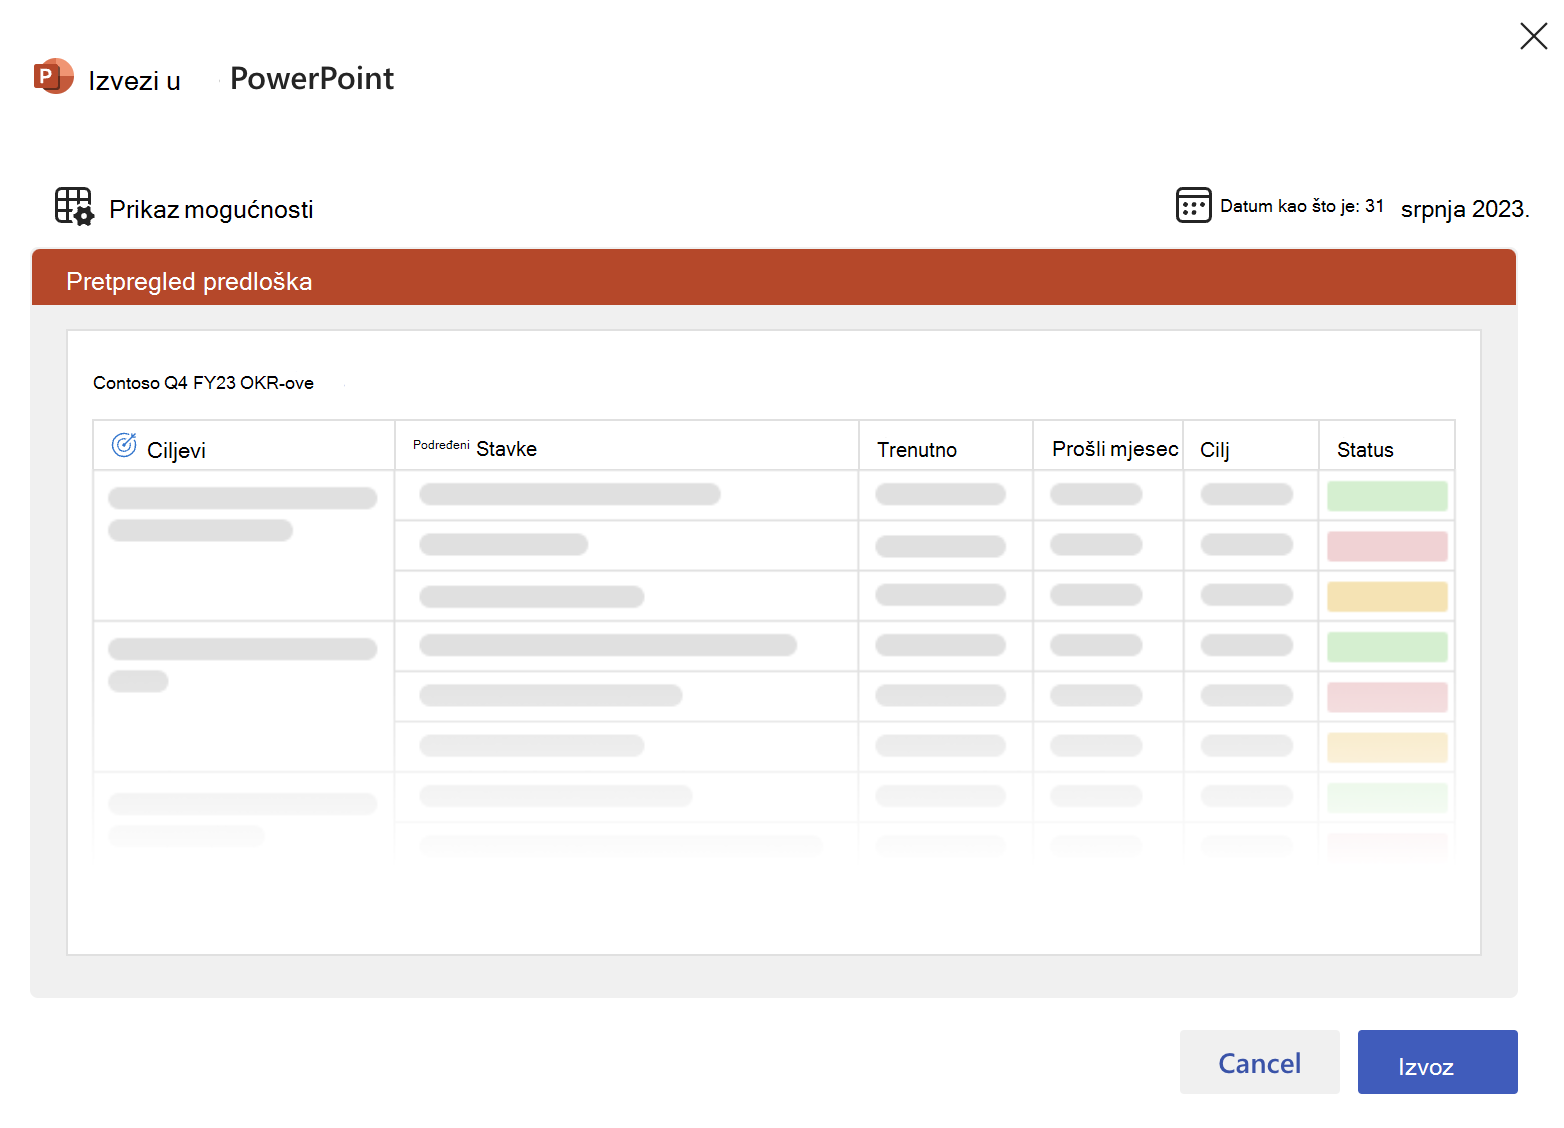 Snimka zaslona preklapanja izvoza programa Powerpoint za odabir predloška.